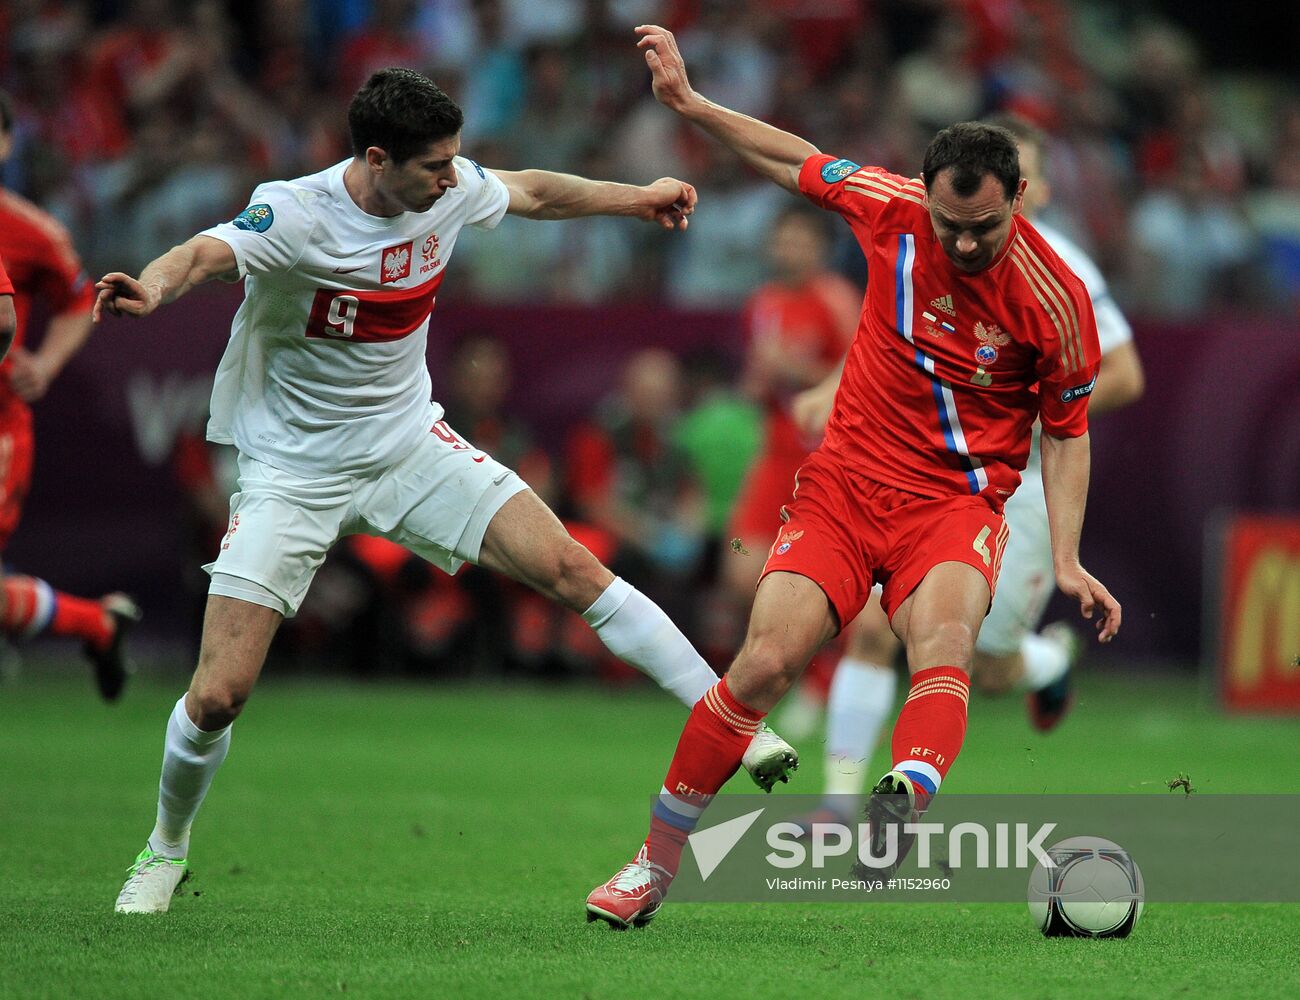 Football. Euro 2012. Poland vs. Russia